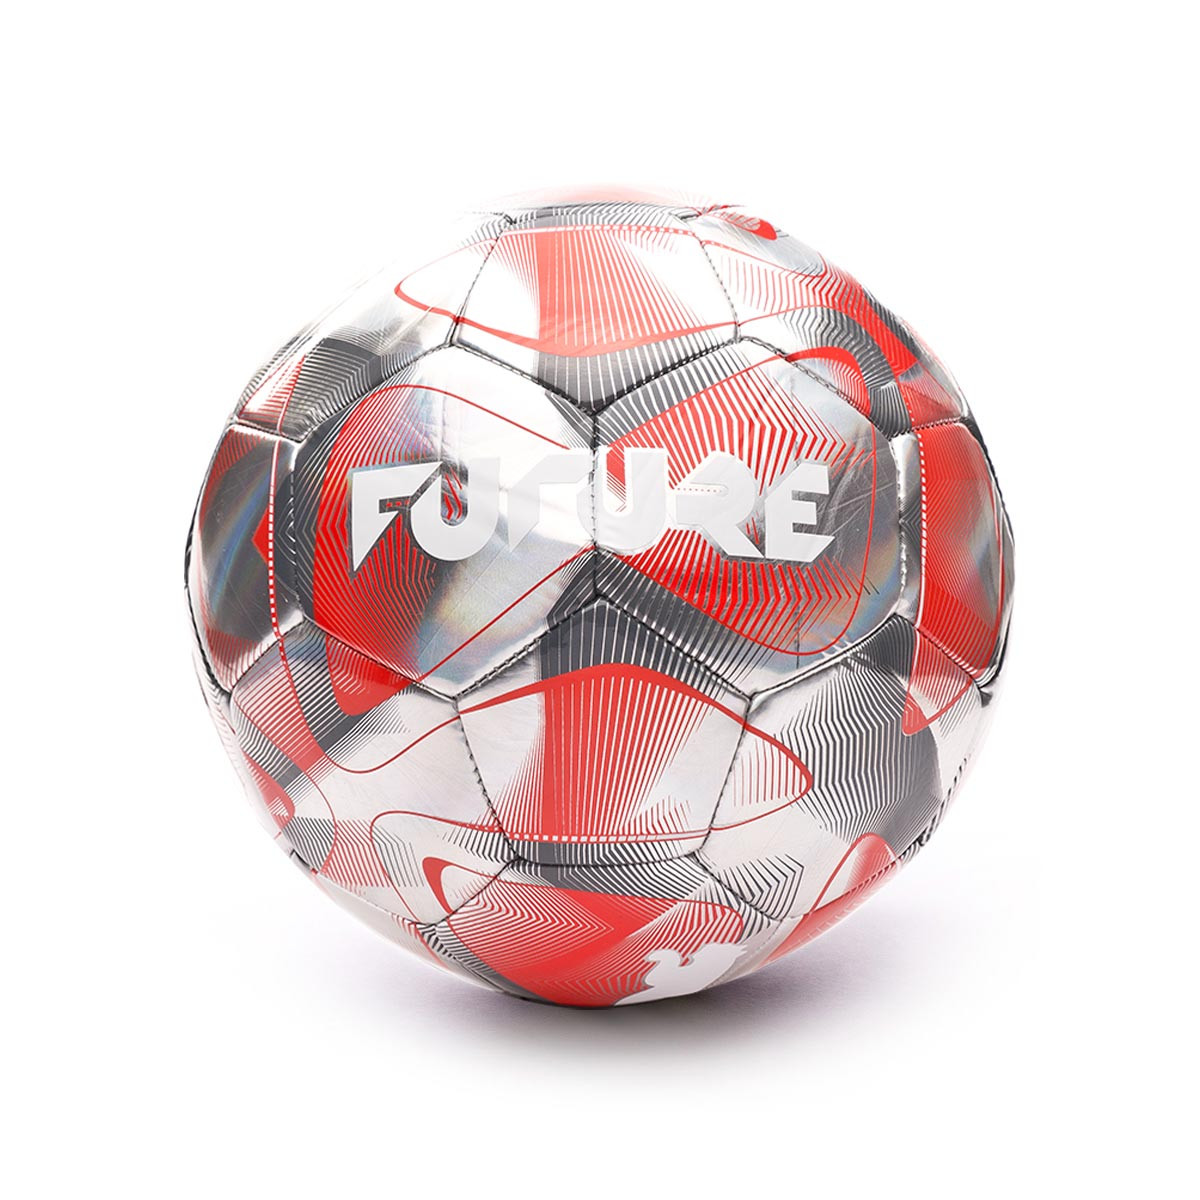 Ball Puma Future Flash Grey dawn-Nrgy red-Puma white - Football store  Fútbol Emotion